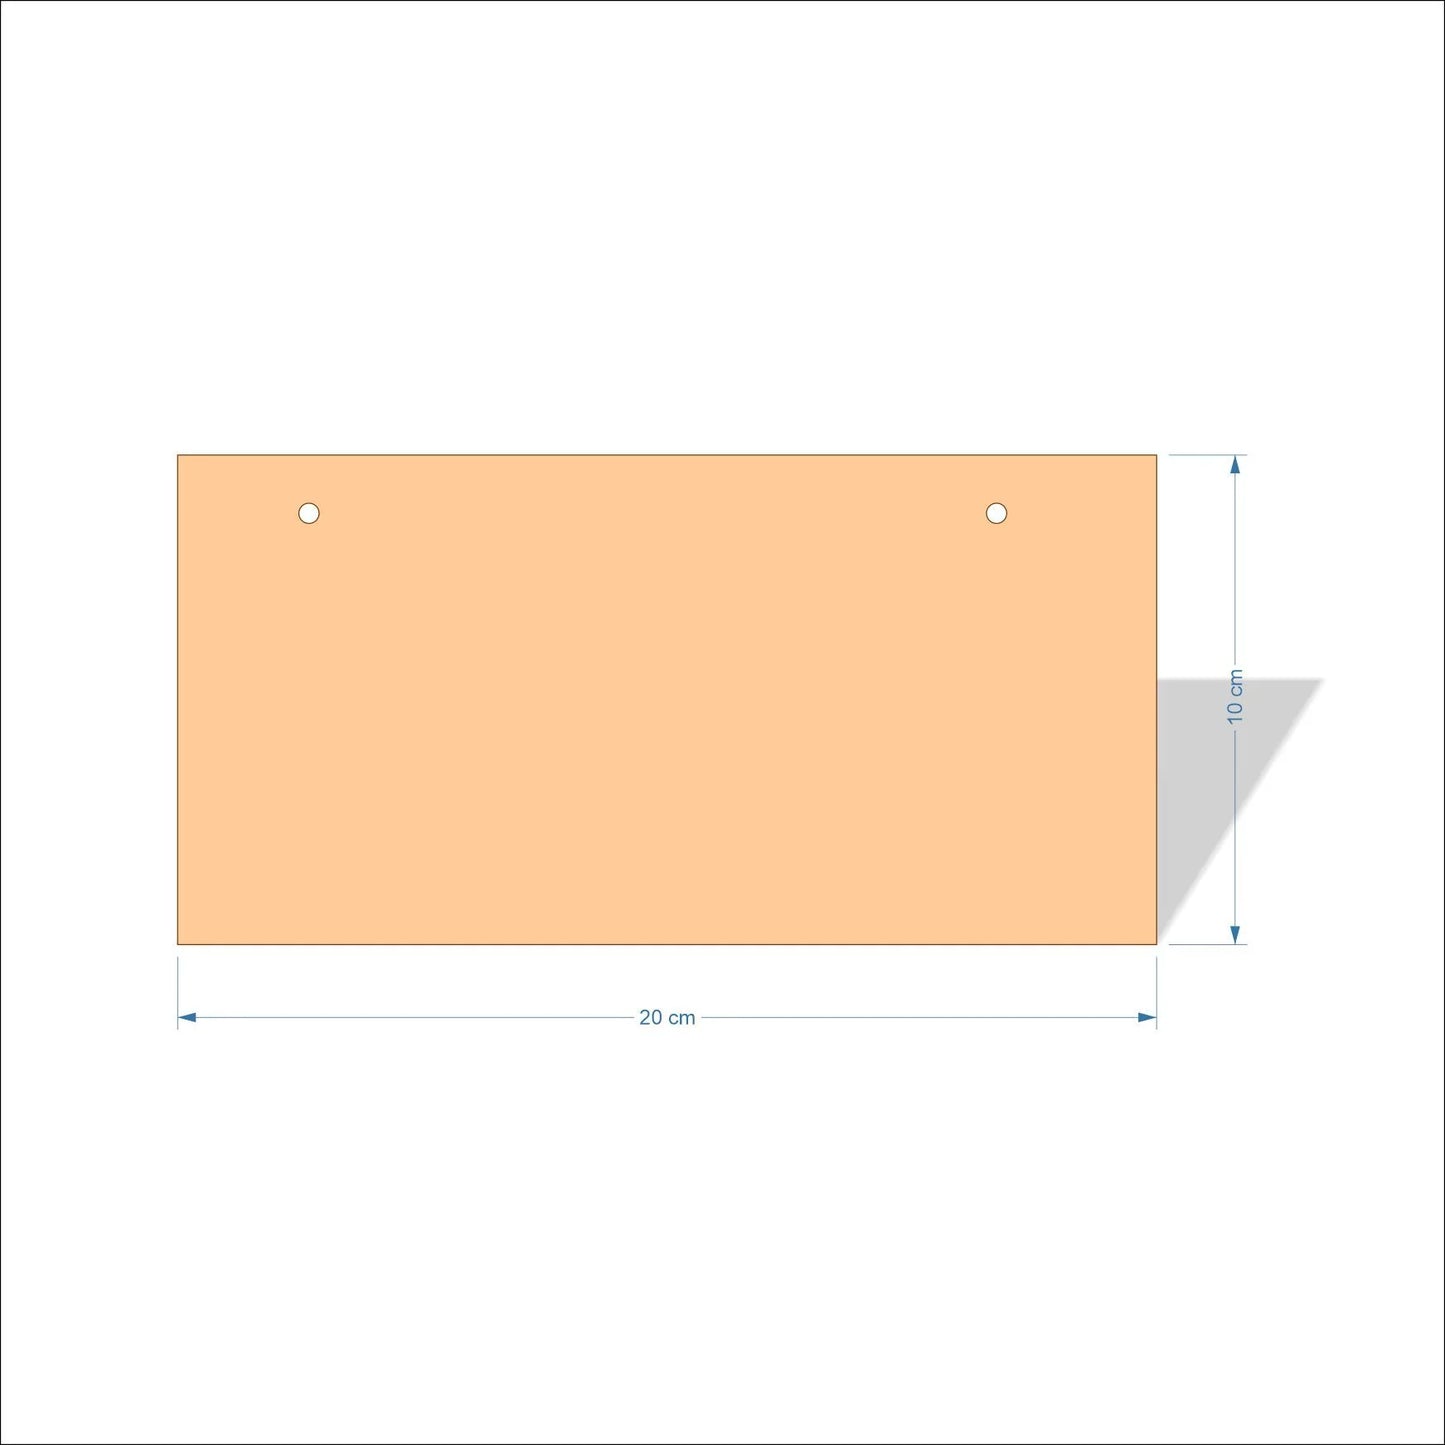 20 cm X 10 cm 4mm poplar plywood Plaques with square corners